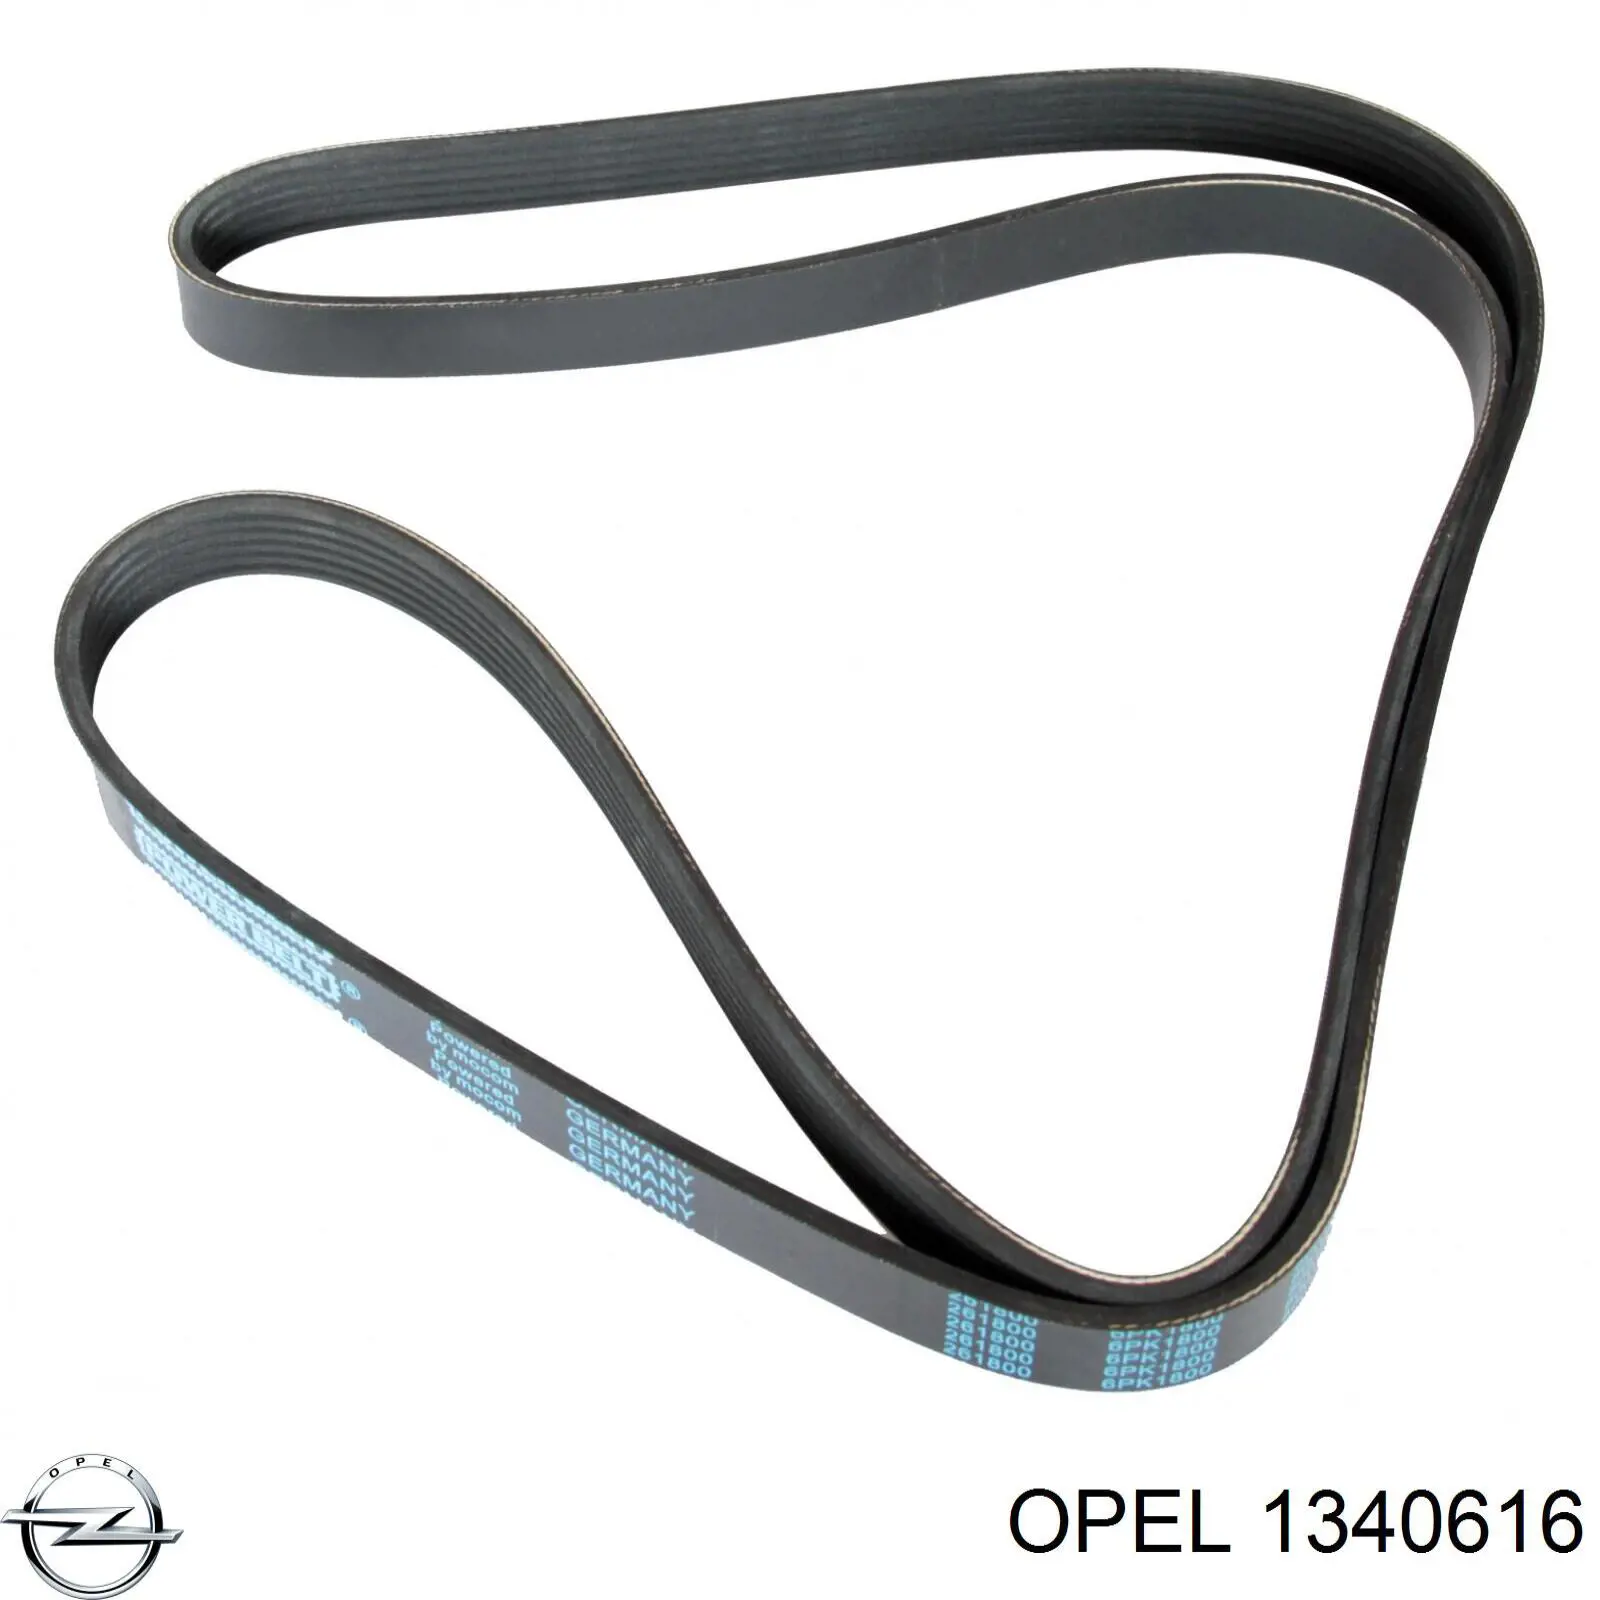 1340616 Opel correa trapezoidal